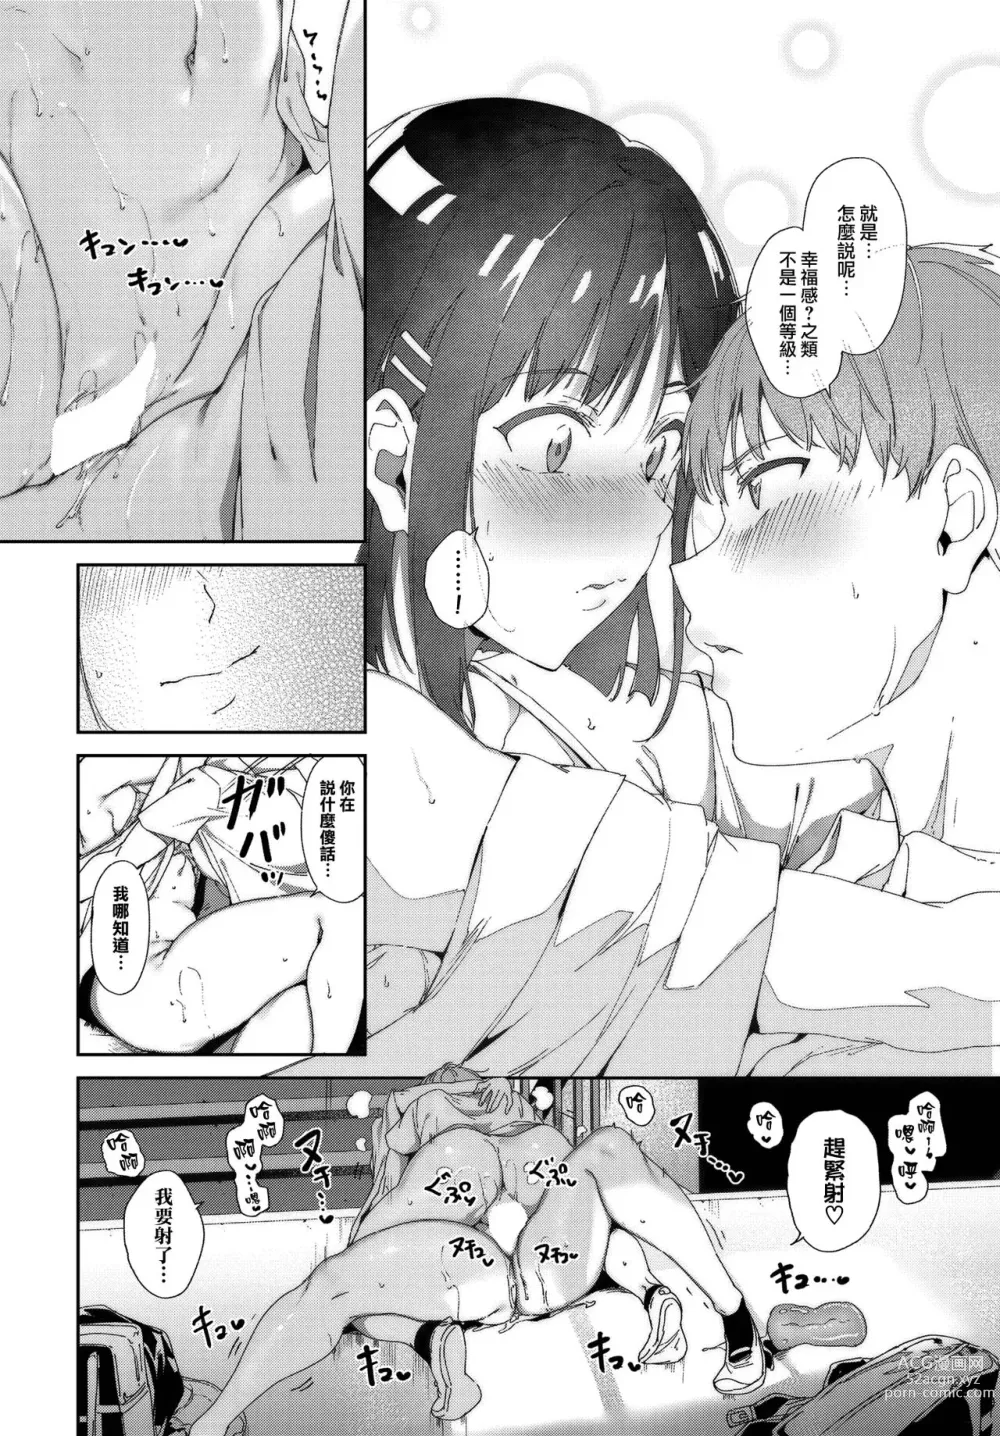 Page 11 of manga Routine 2